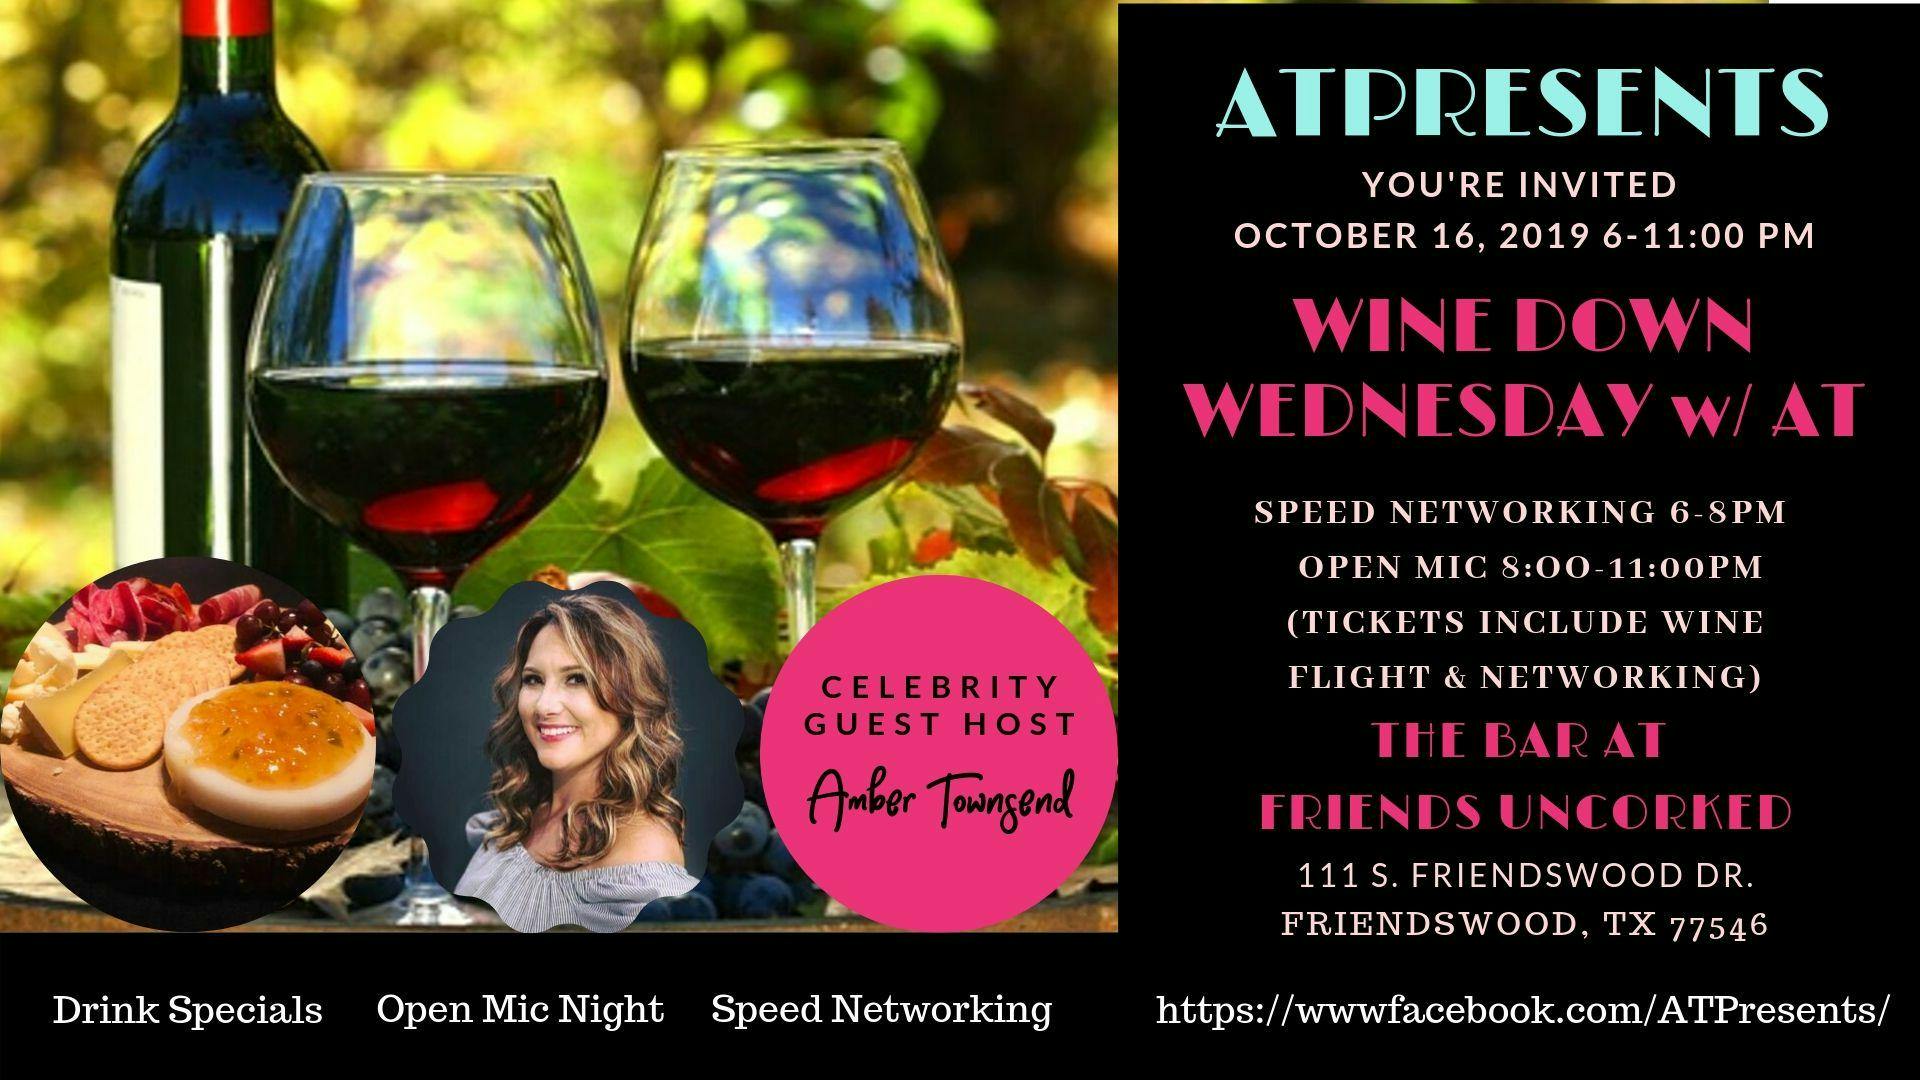 ATPresents Wine Down Wednesday w/ AT Speed Networking & Wine